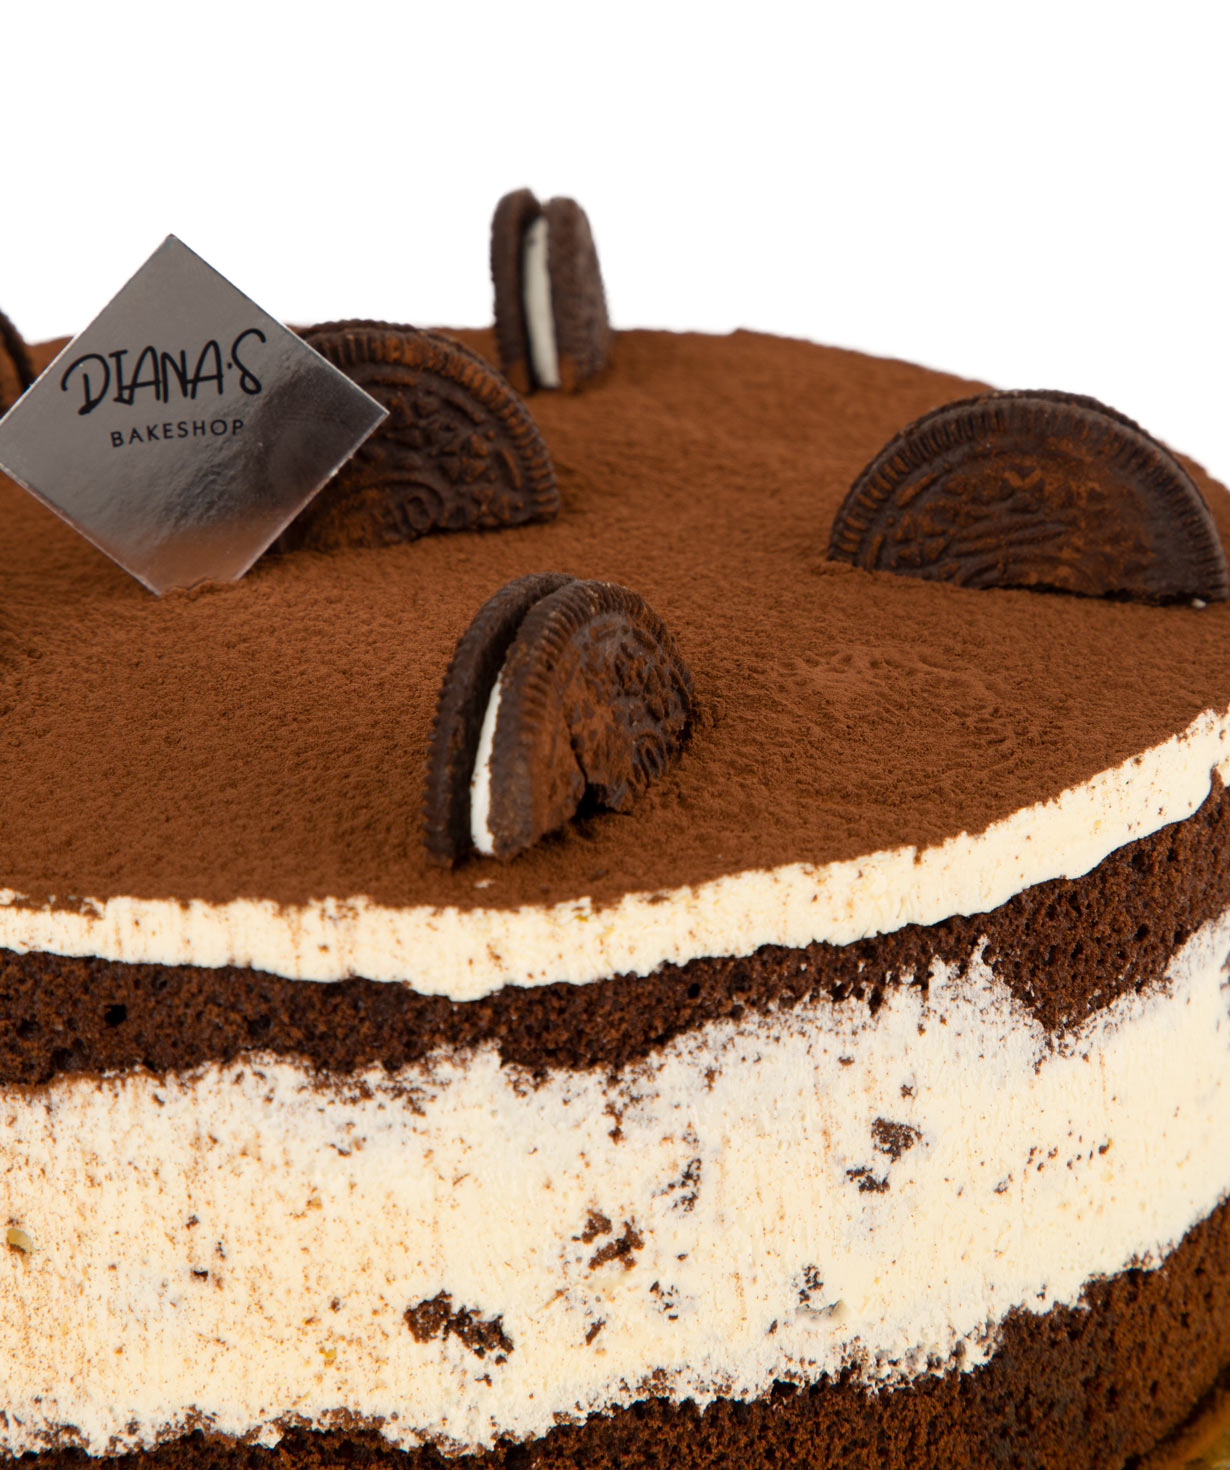 Cake `Oreo`